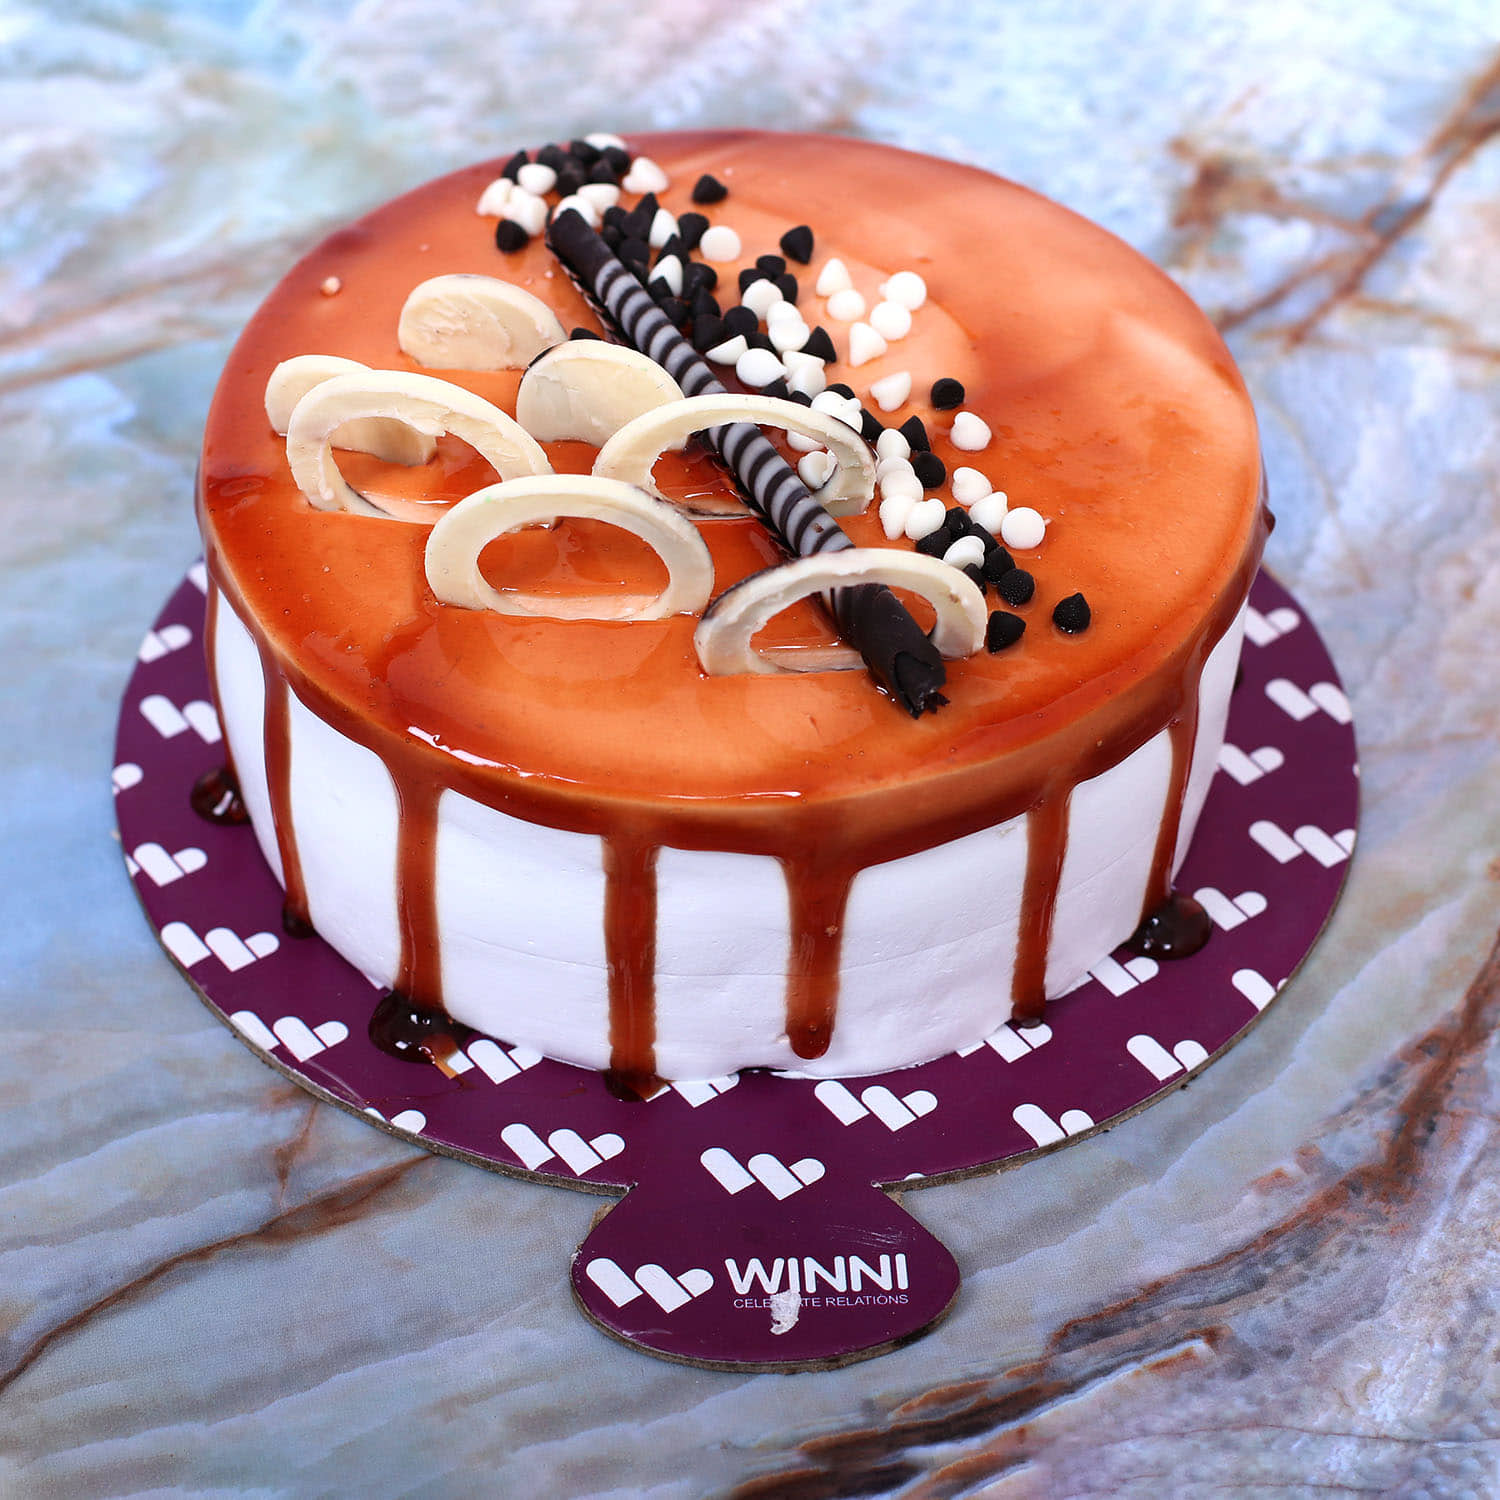 Winni Cakes & More Vijay Nagar Indore - Take your pleasure to the next  level. #cake #cakes #birthdaycake #cakedecorating #chocolate #food #dessert  #cakesofinstagram #birthday #instafood #cakedesign #cakestagram #instacake  #yummy #homemade #love #sweet #